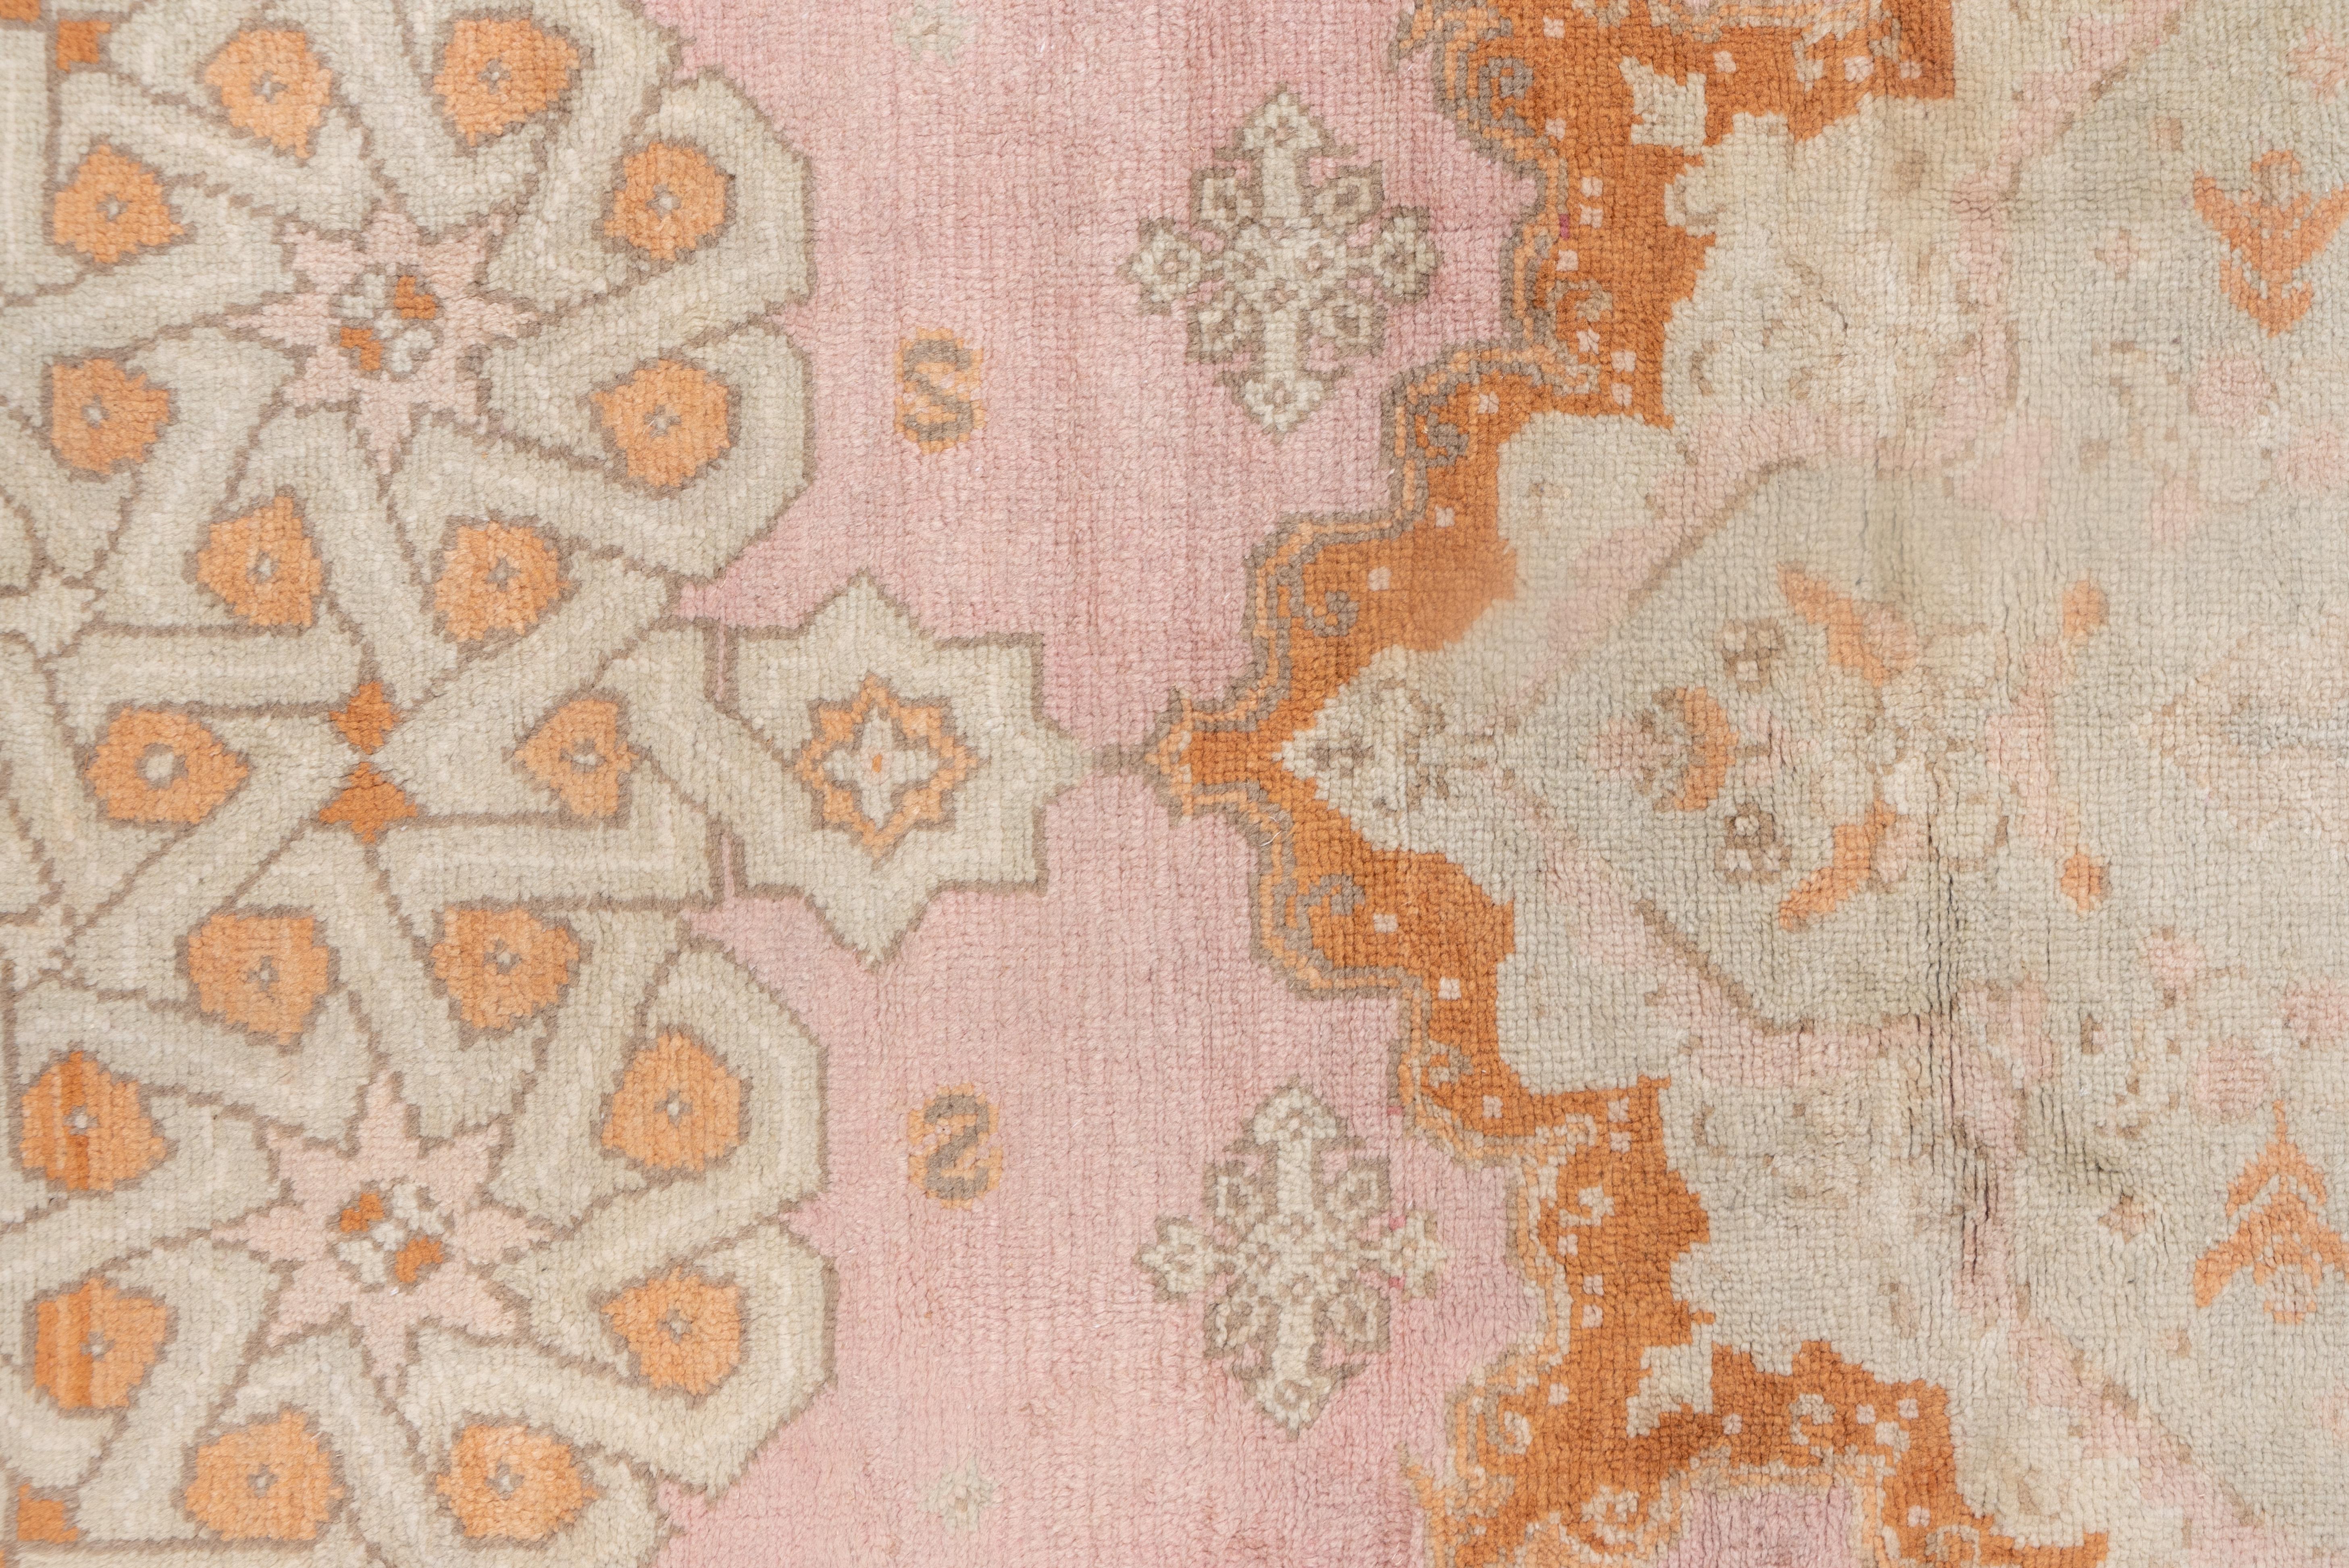 Early 20th Century Massive Antique Turkish Oushak Mansion Carpet, Pink, Ivory & Orange Tones For Sale